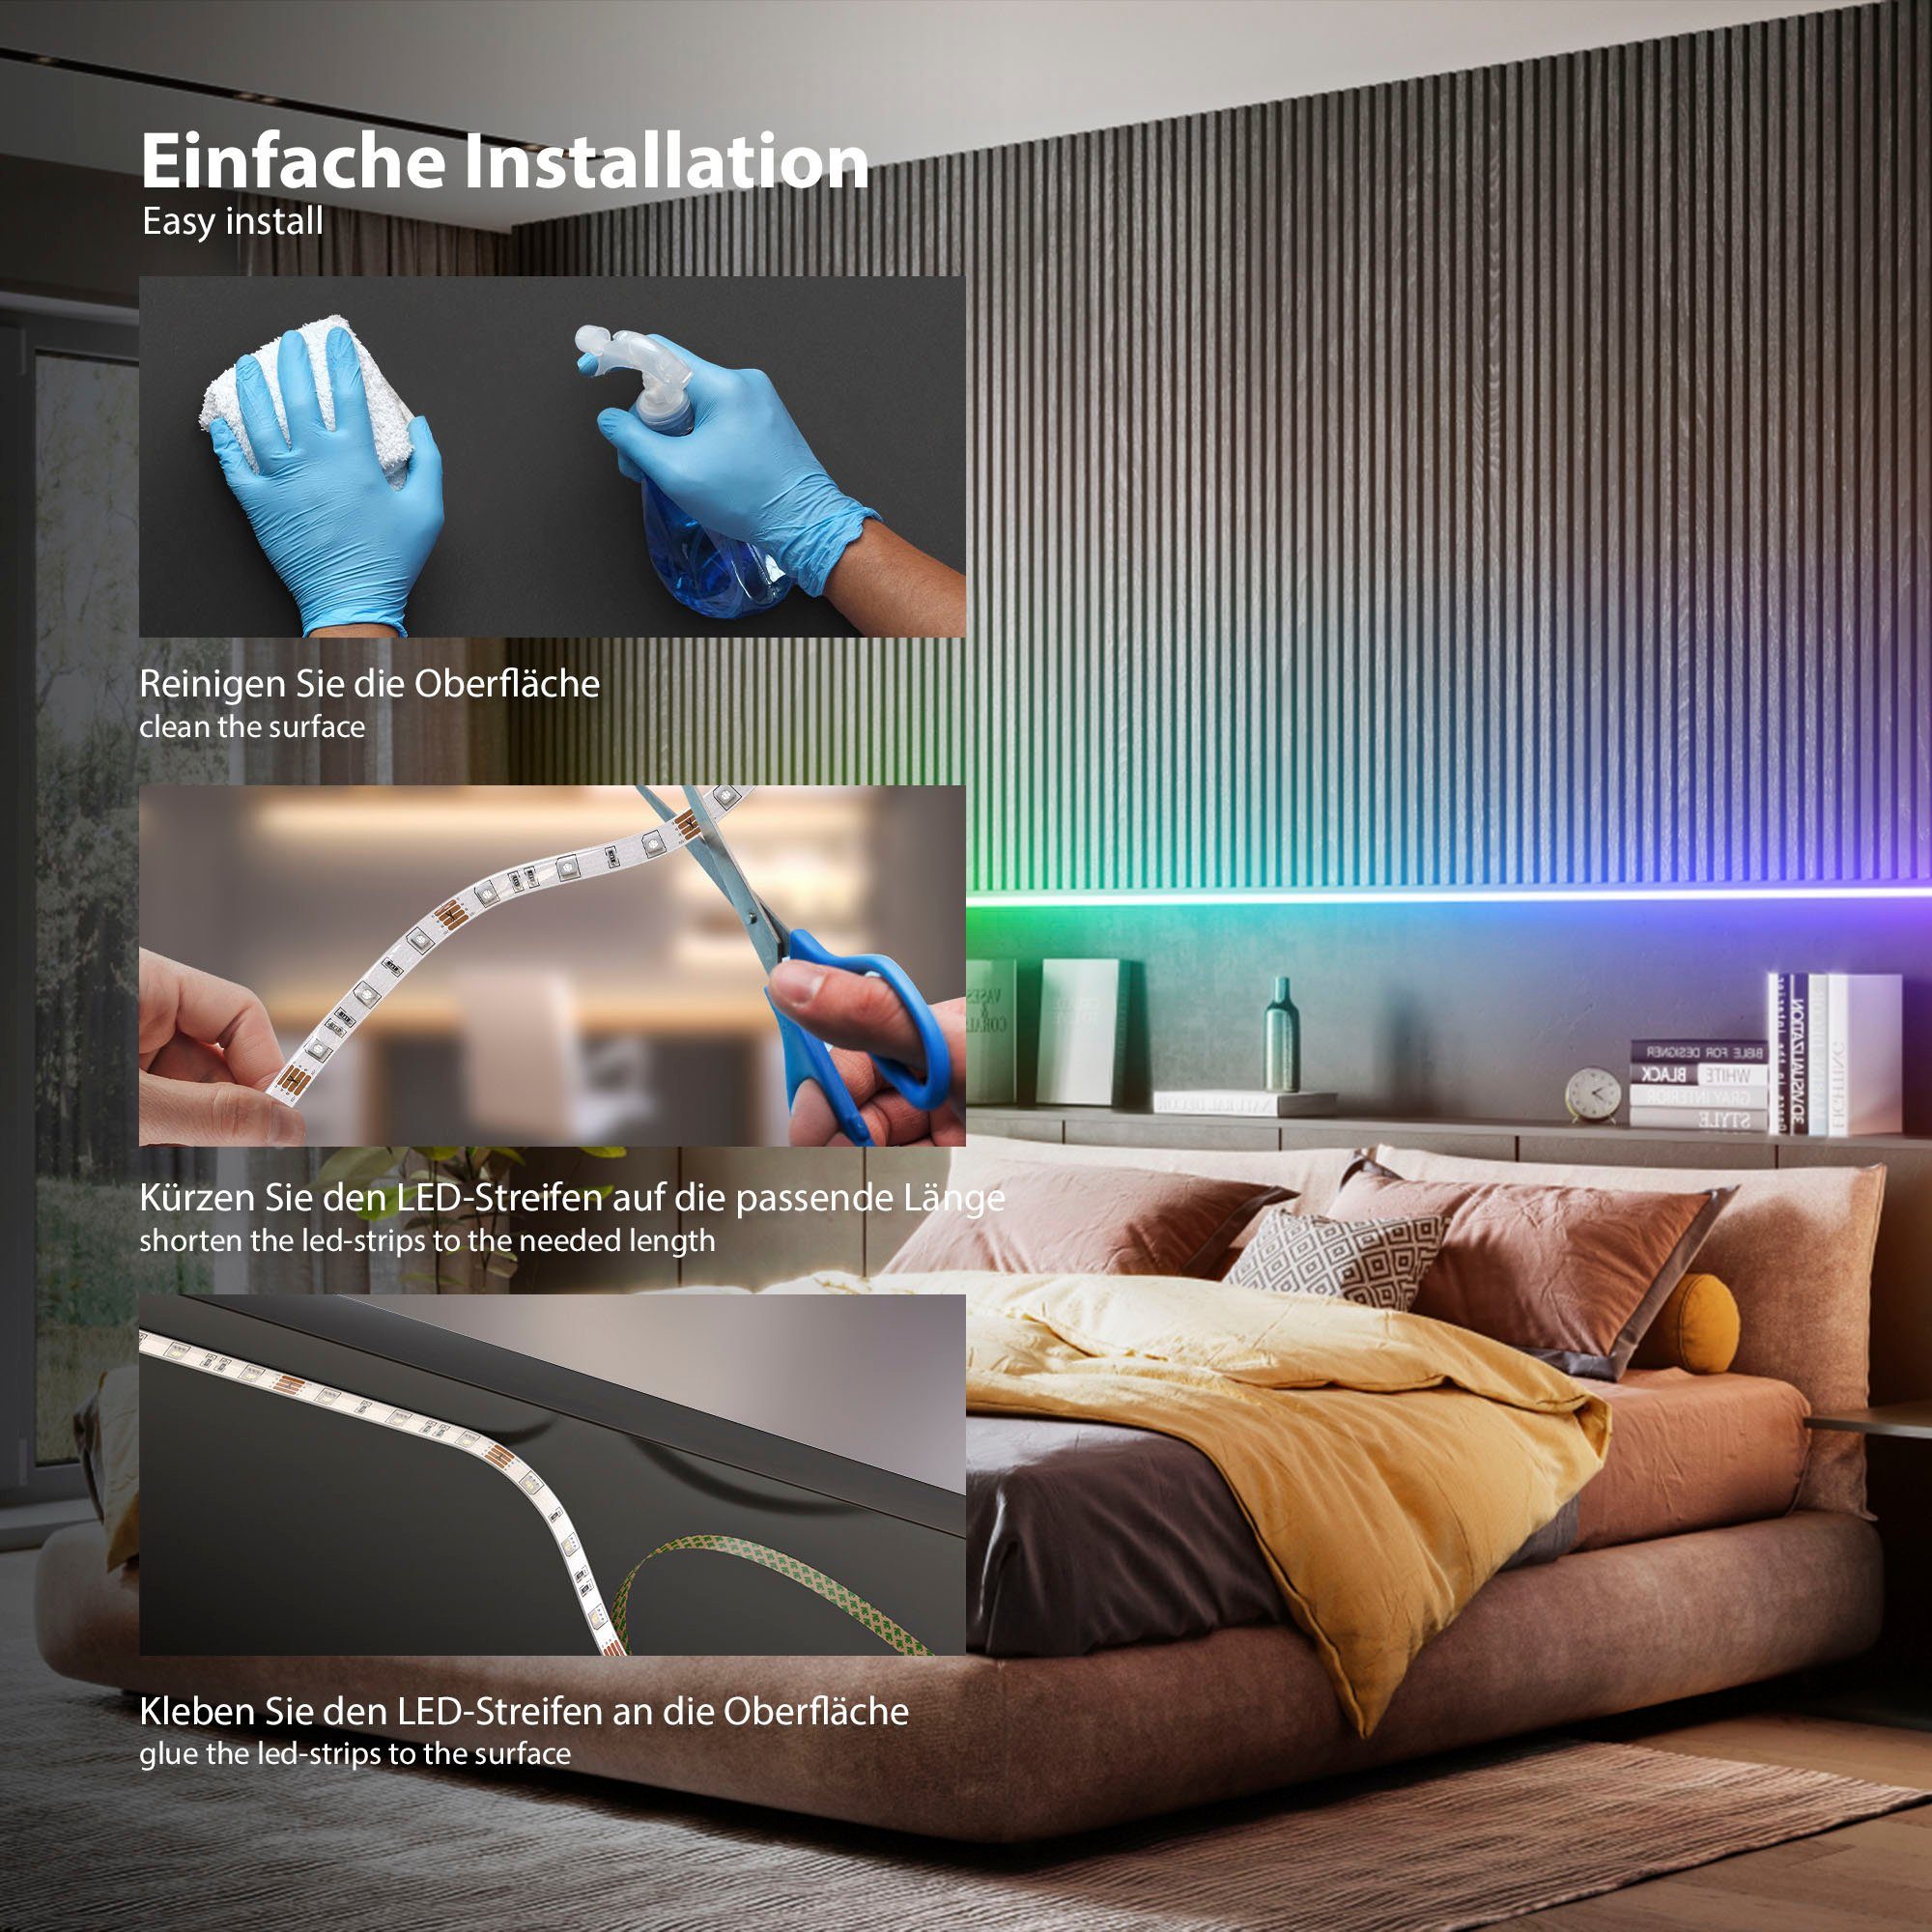 B.K.Licht LED-Streifen Wifi Selbstklebend smartes mit RGBIC, 150-flammig, Musiksensor, Lichtleiste, LED Band